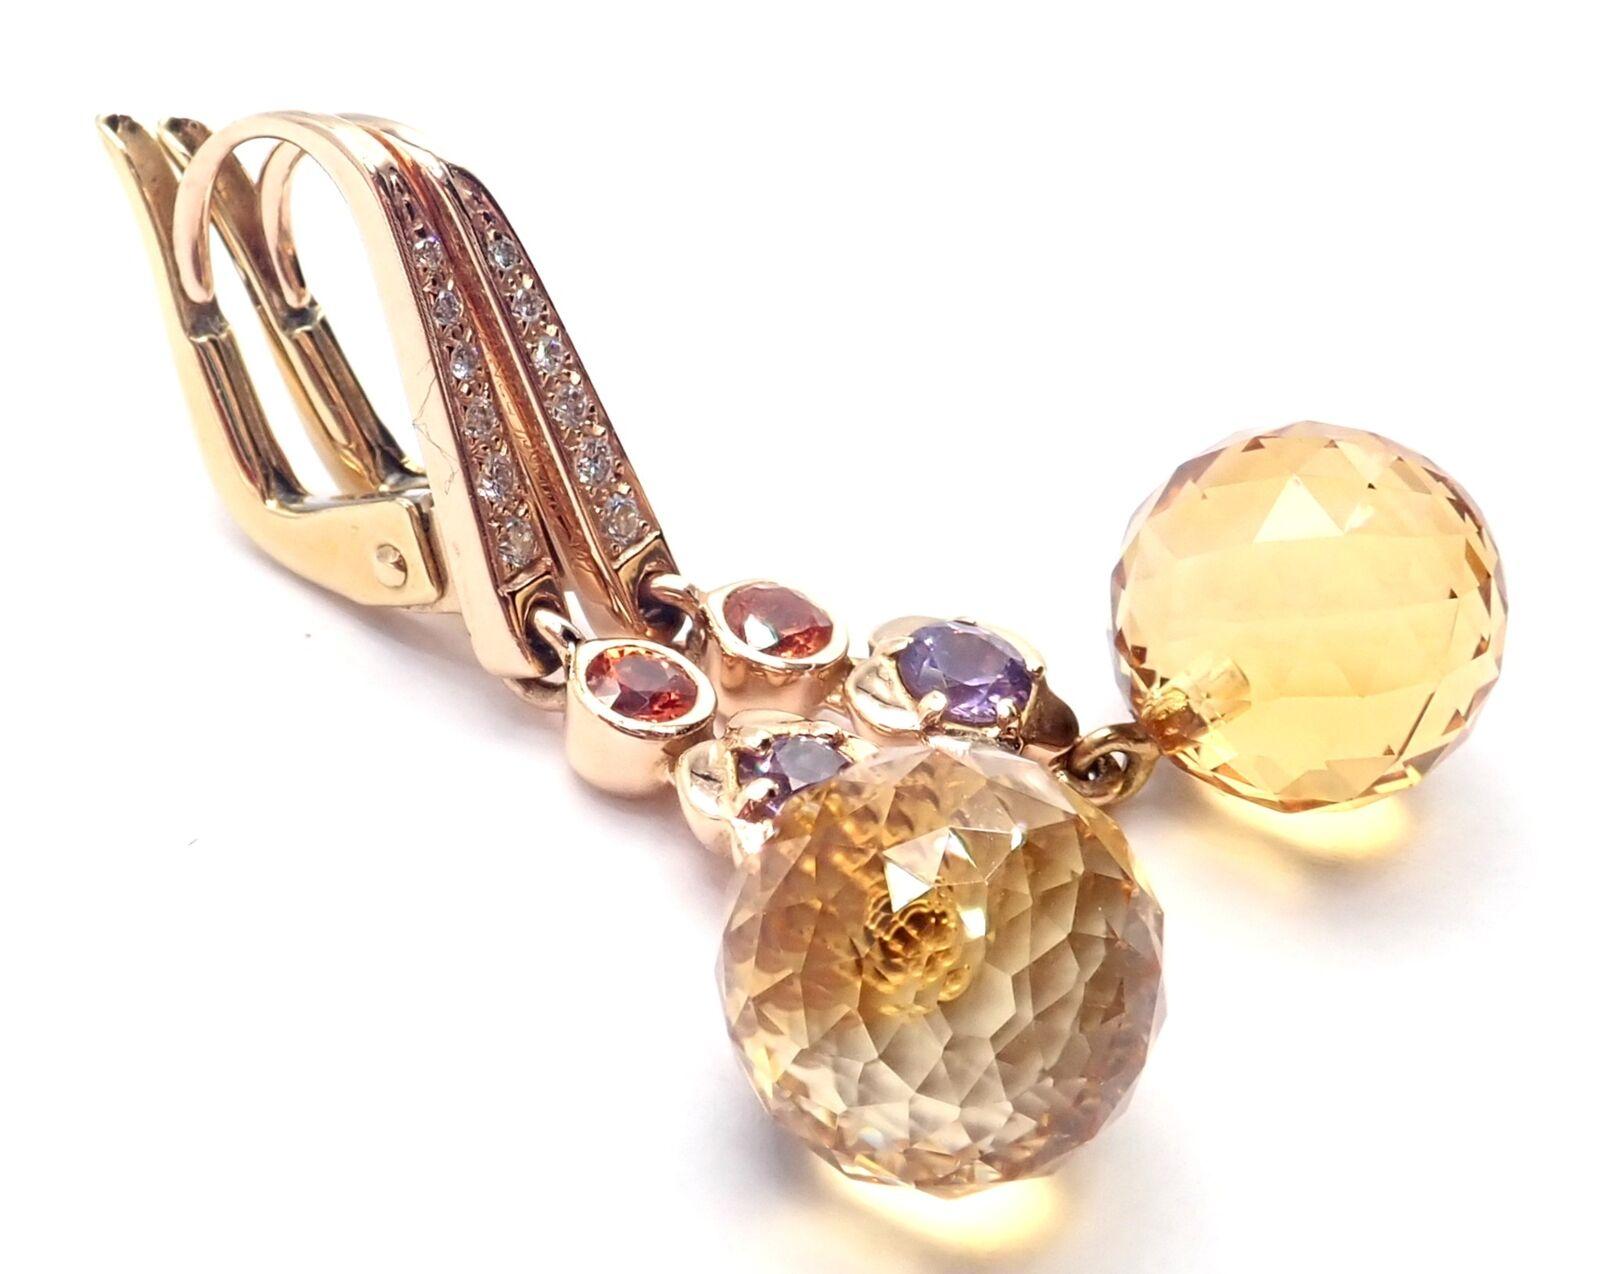 Brilliant Cut Chanel Mademoiselle Diamond Amethyst Citrine Yellow Gold Earrings For Sale